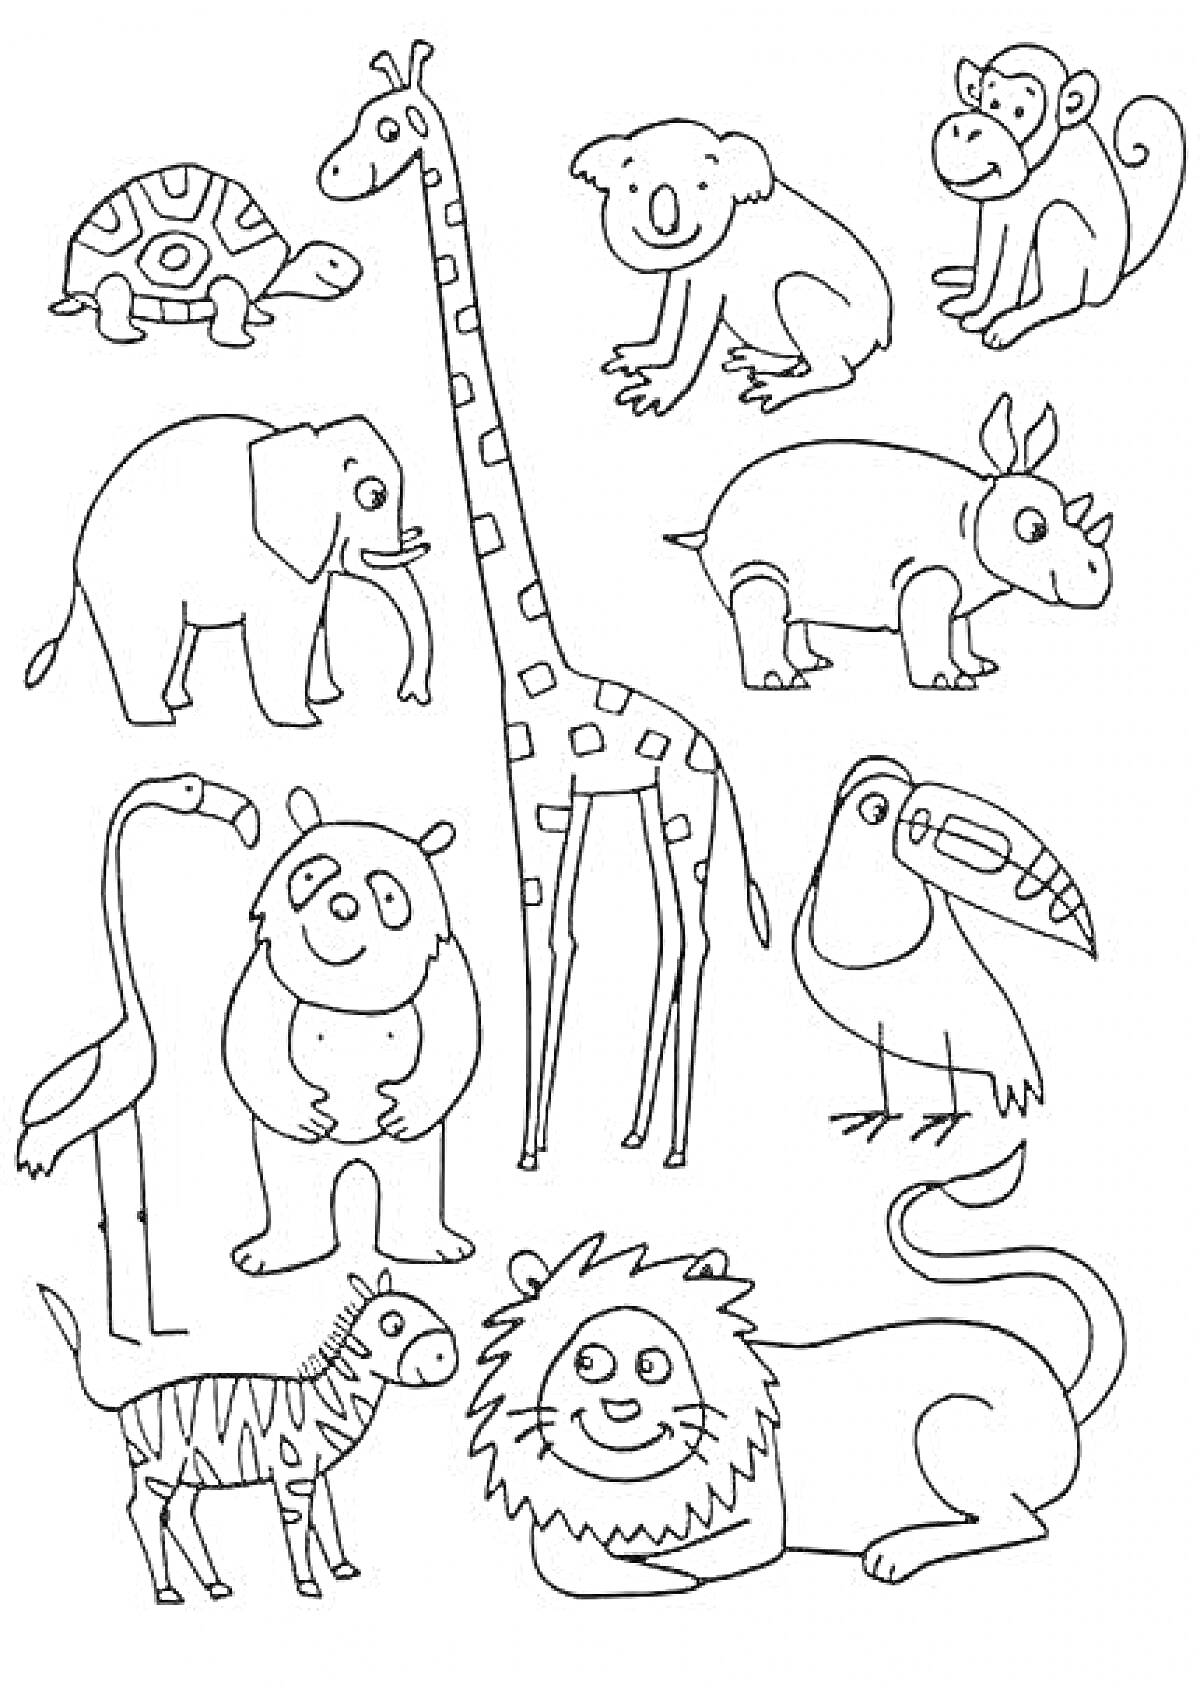 Раскраска Зоопарк с животными: черепаха, жираф, коала, обезьяна, носорог, фламинго, панда, тукан, зебра, лев и слон